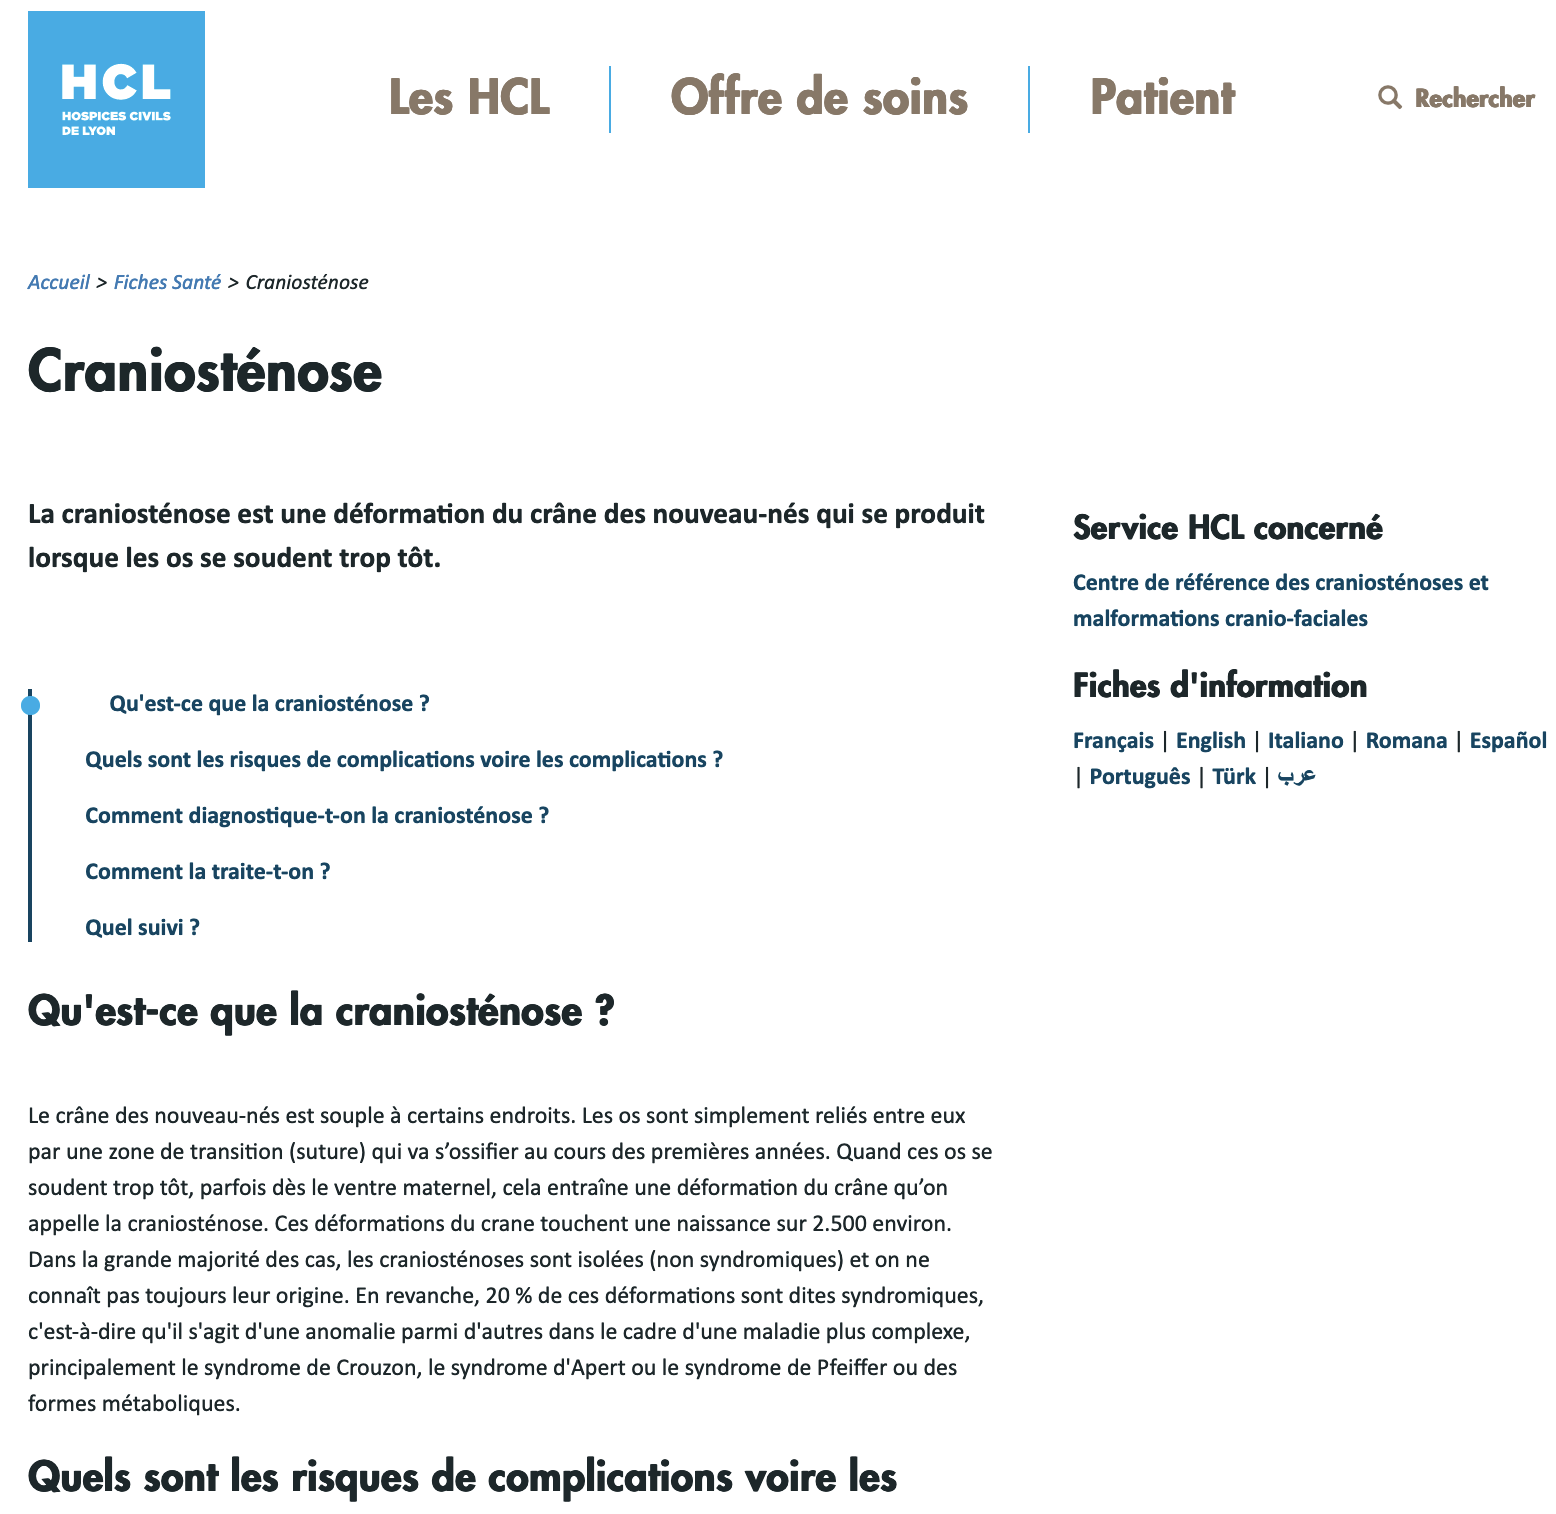 Image site HCL Page craniosténose